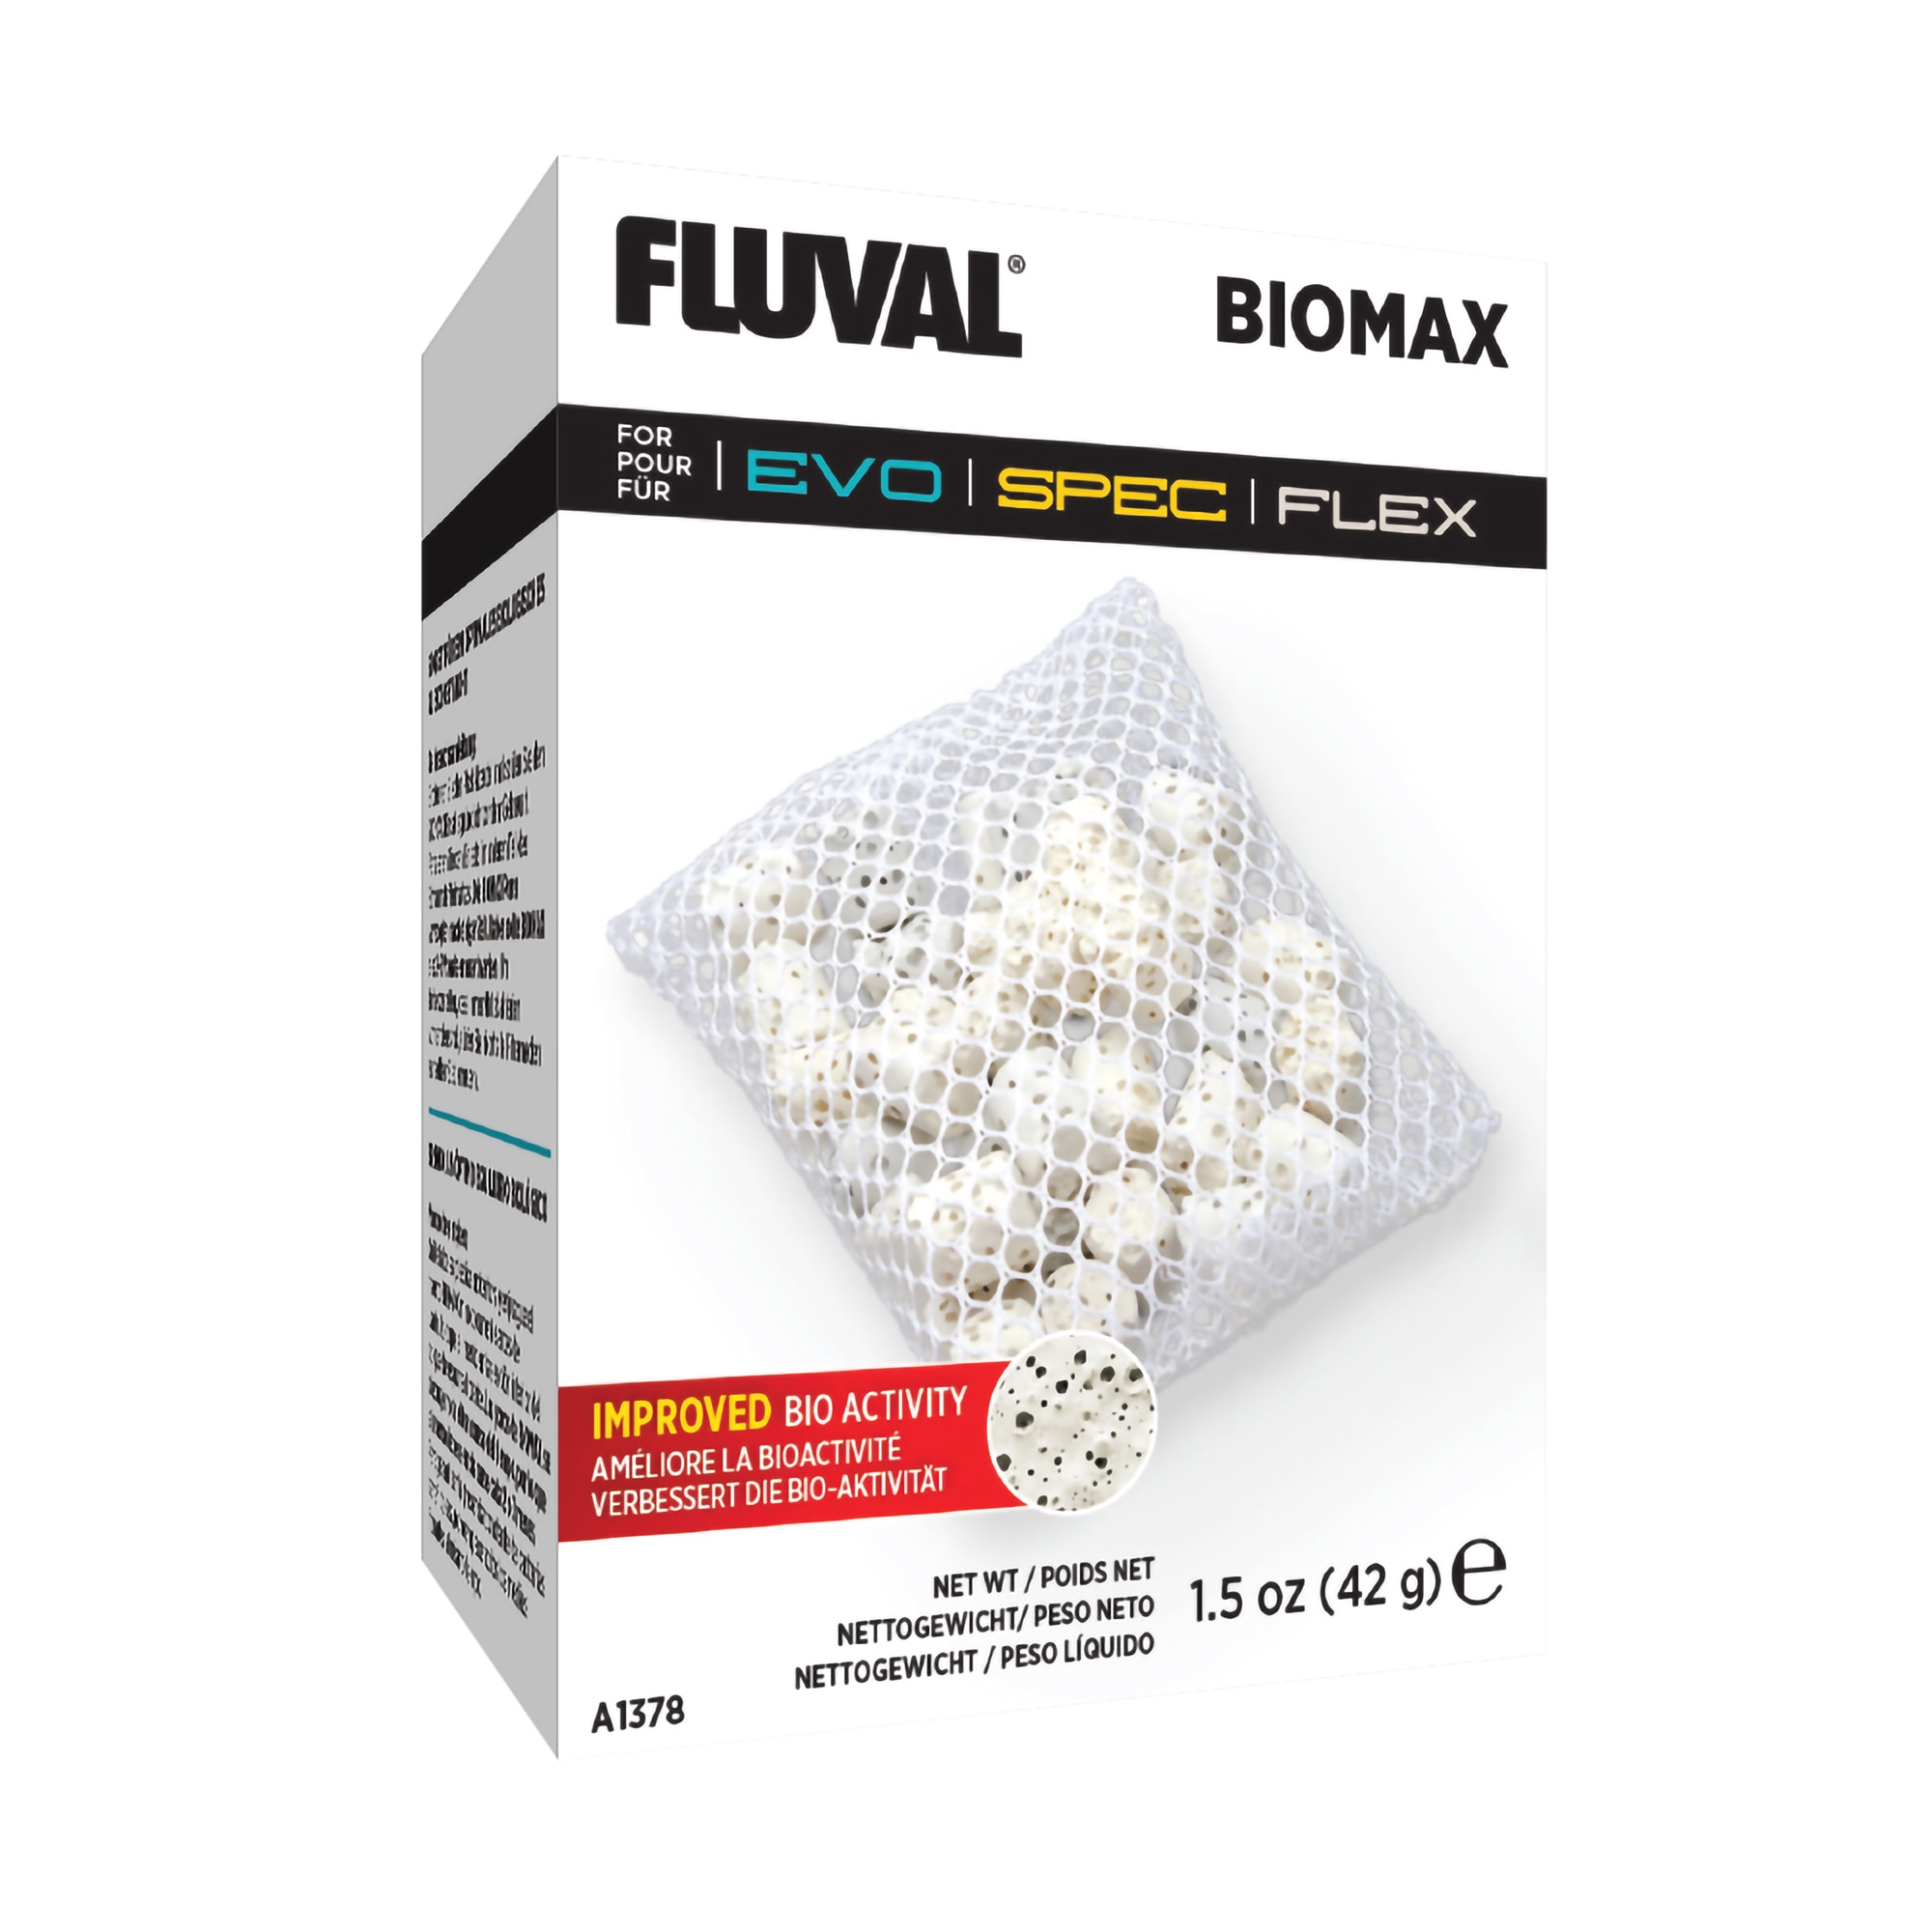 UPC 015561113786 product image for Fluval Spec Biomax Filter Media, 1.5 oz. | upcitemdb.com